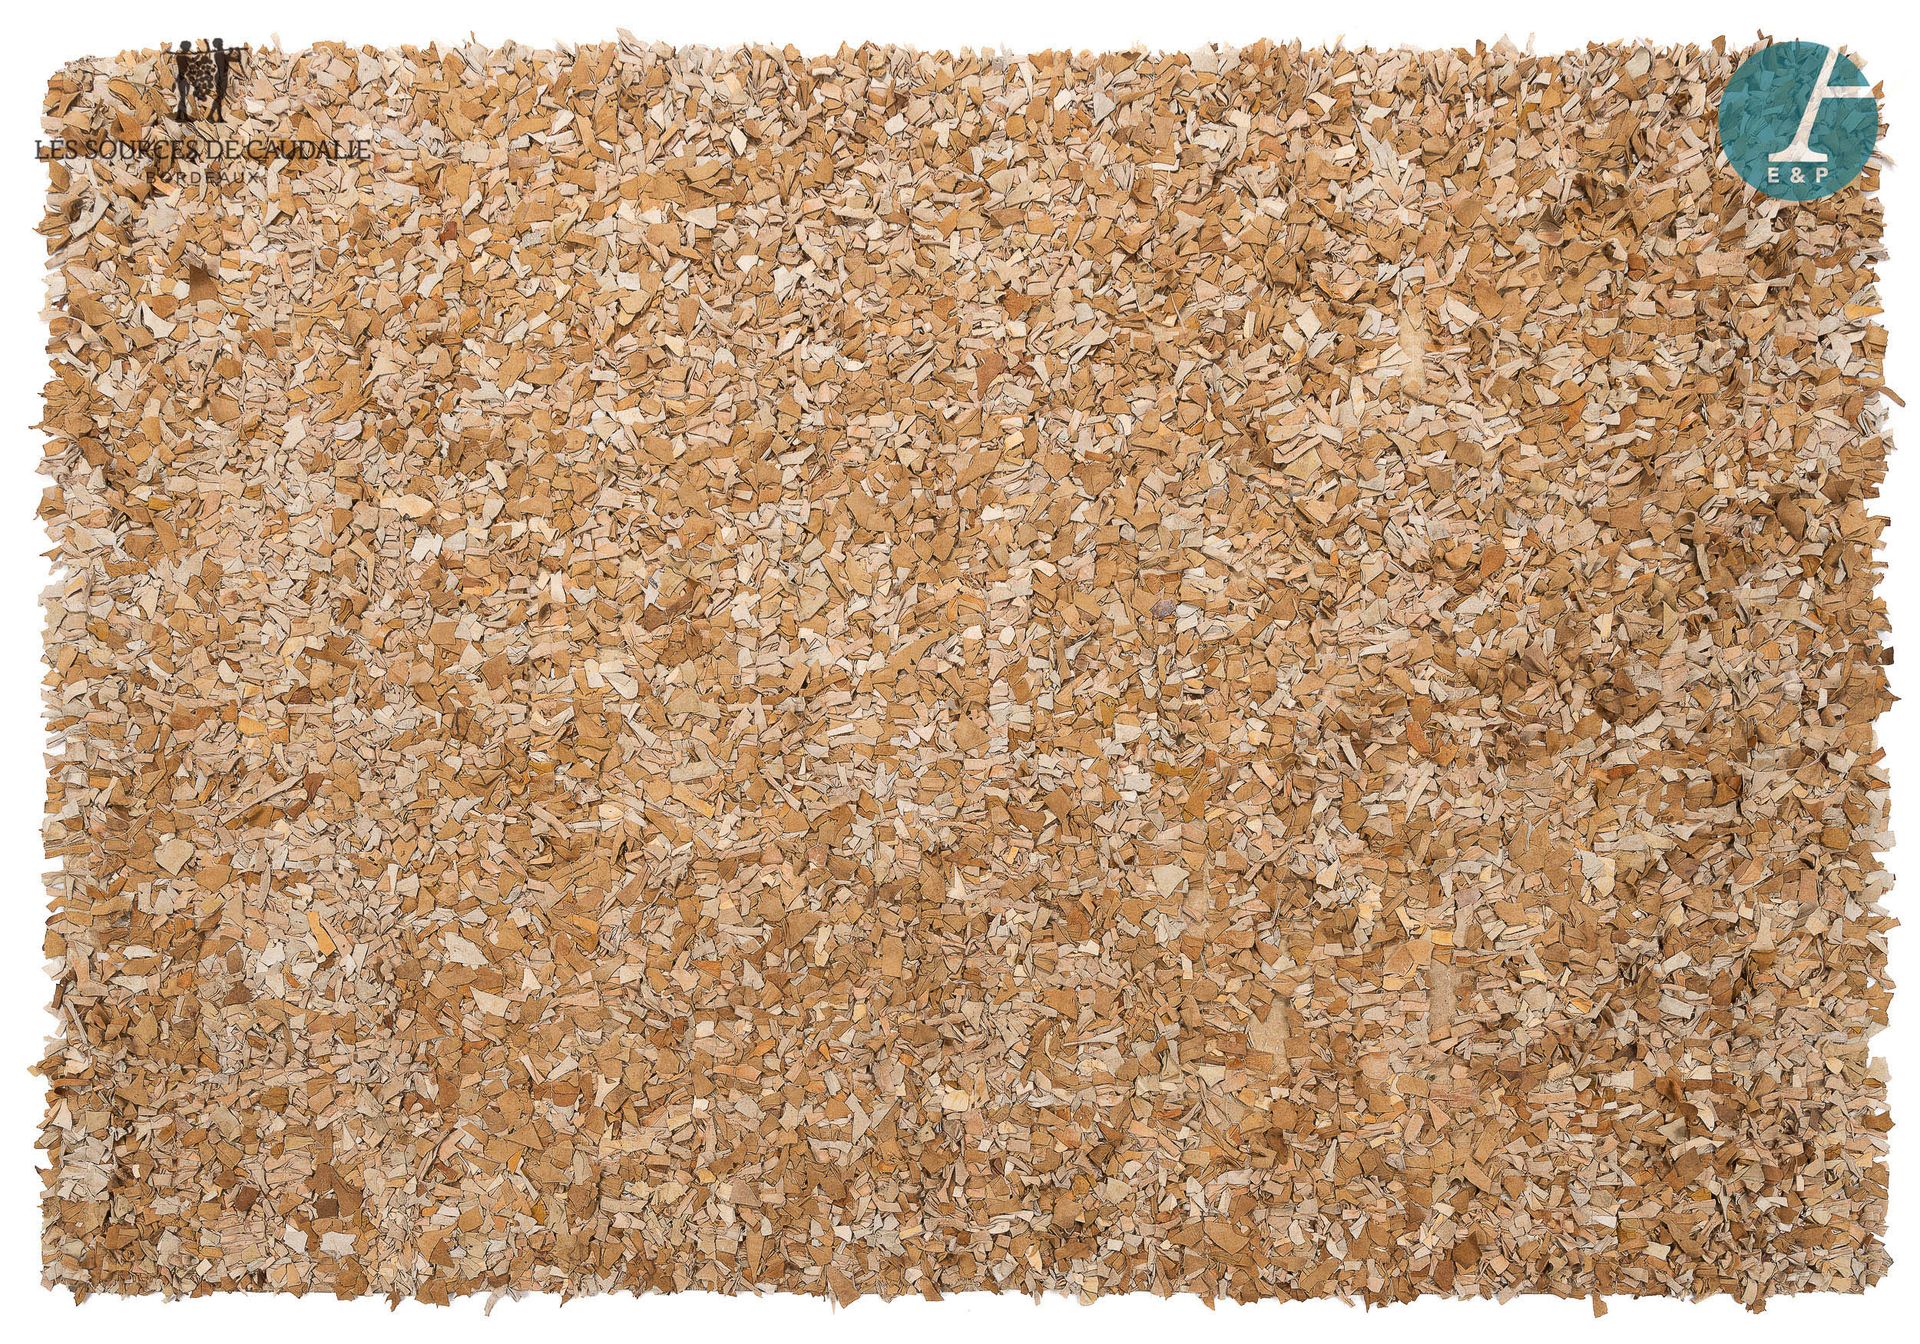 Null 从4号房间 "Les Douelles "开始。

TOULEMONDE BOCHART，棕色皮条的毛茸茸的地毯。

204厘米 x 139厘米